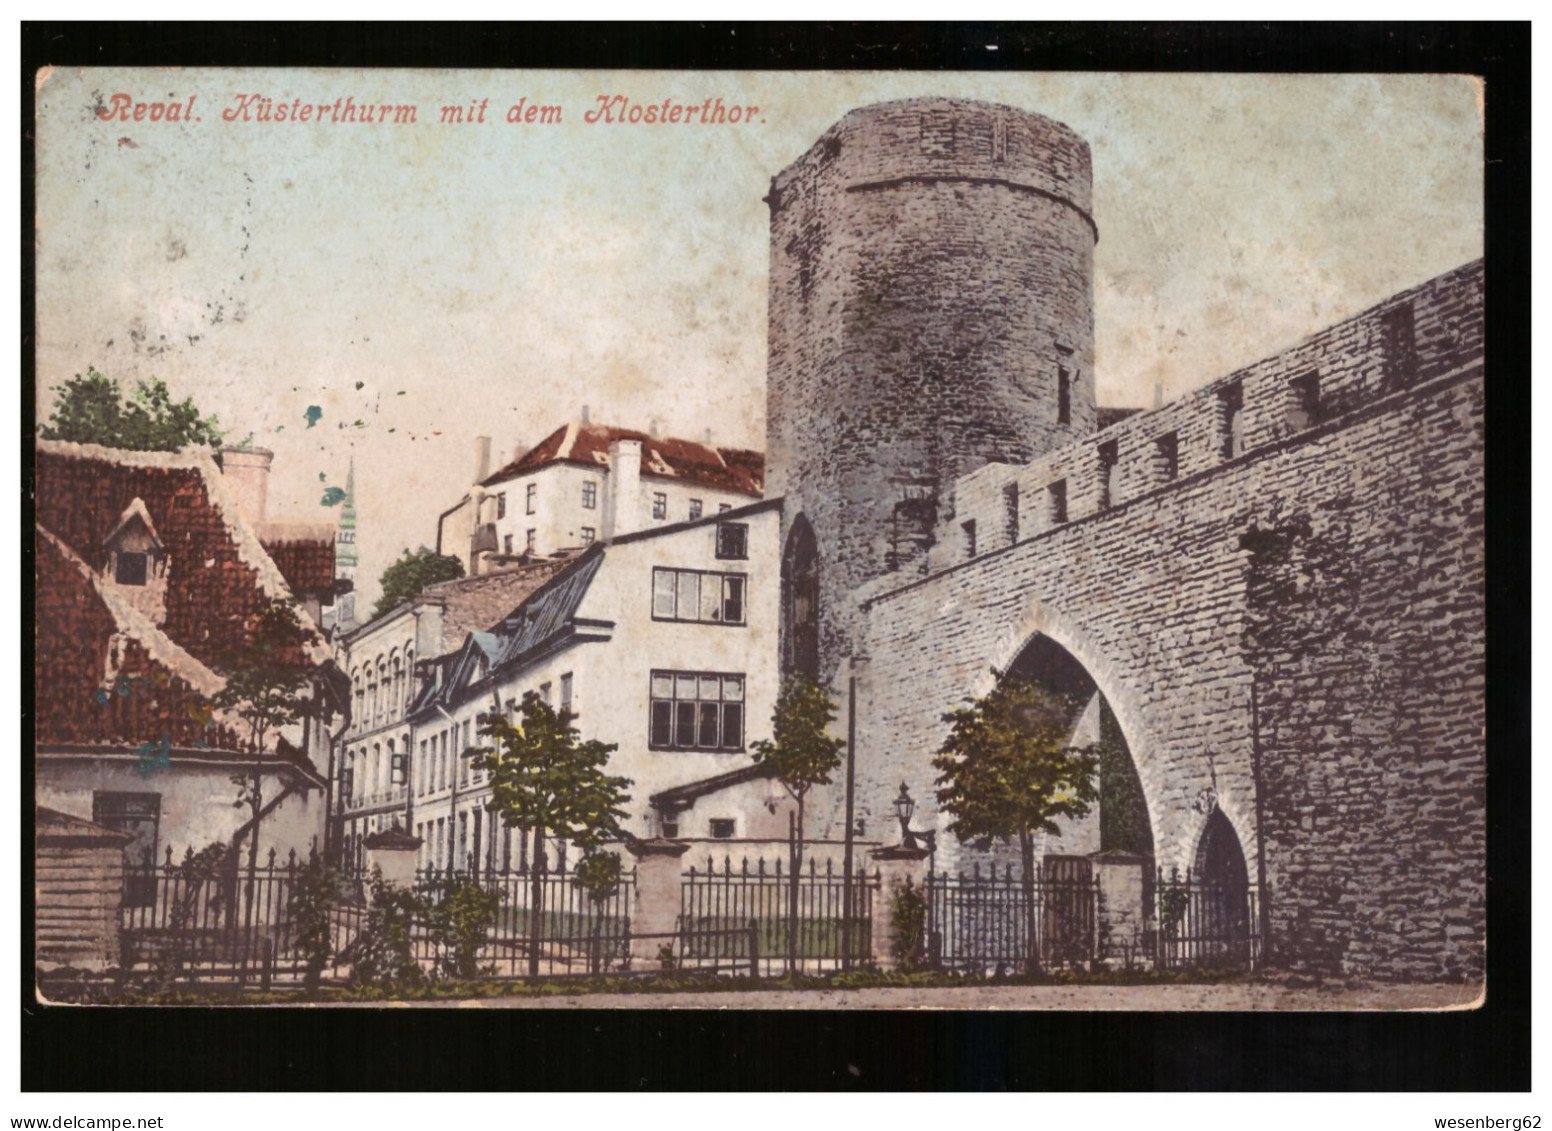 Reval/ Tallinn Küsterthurm Mit Der Klosterthor 1907 - Estonia